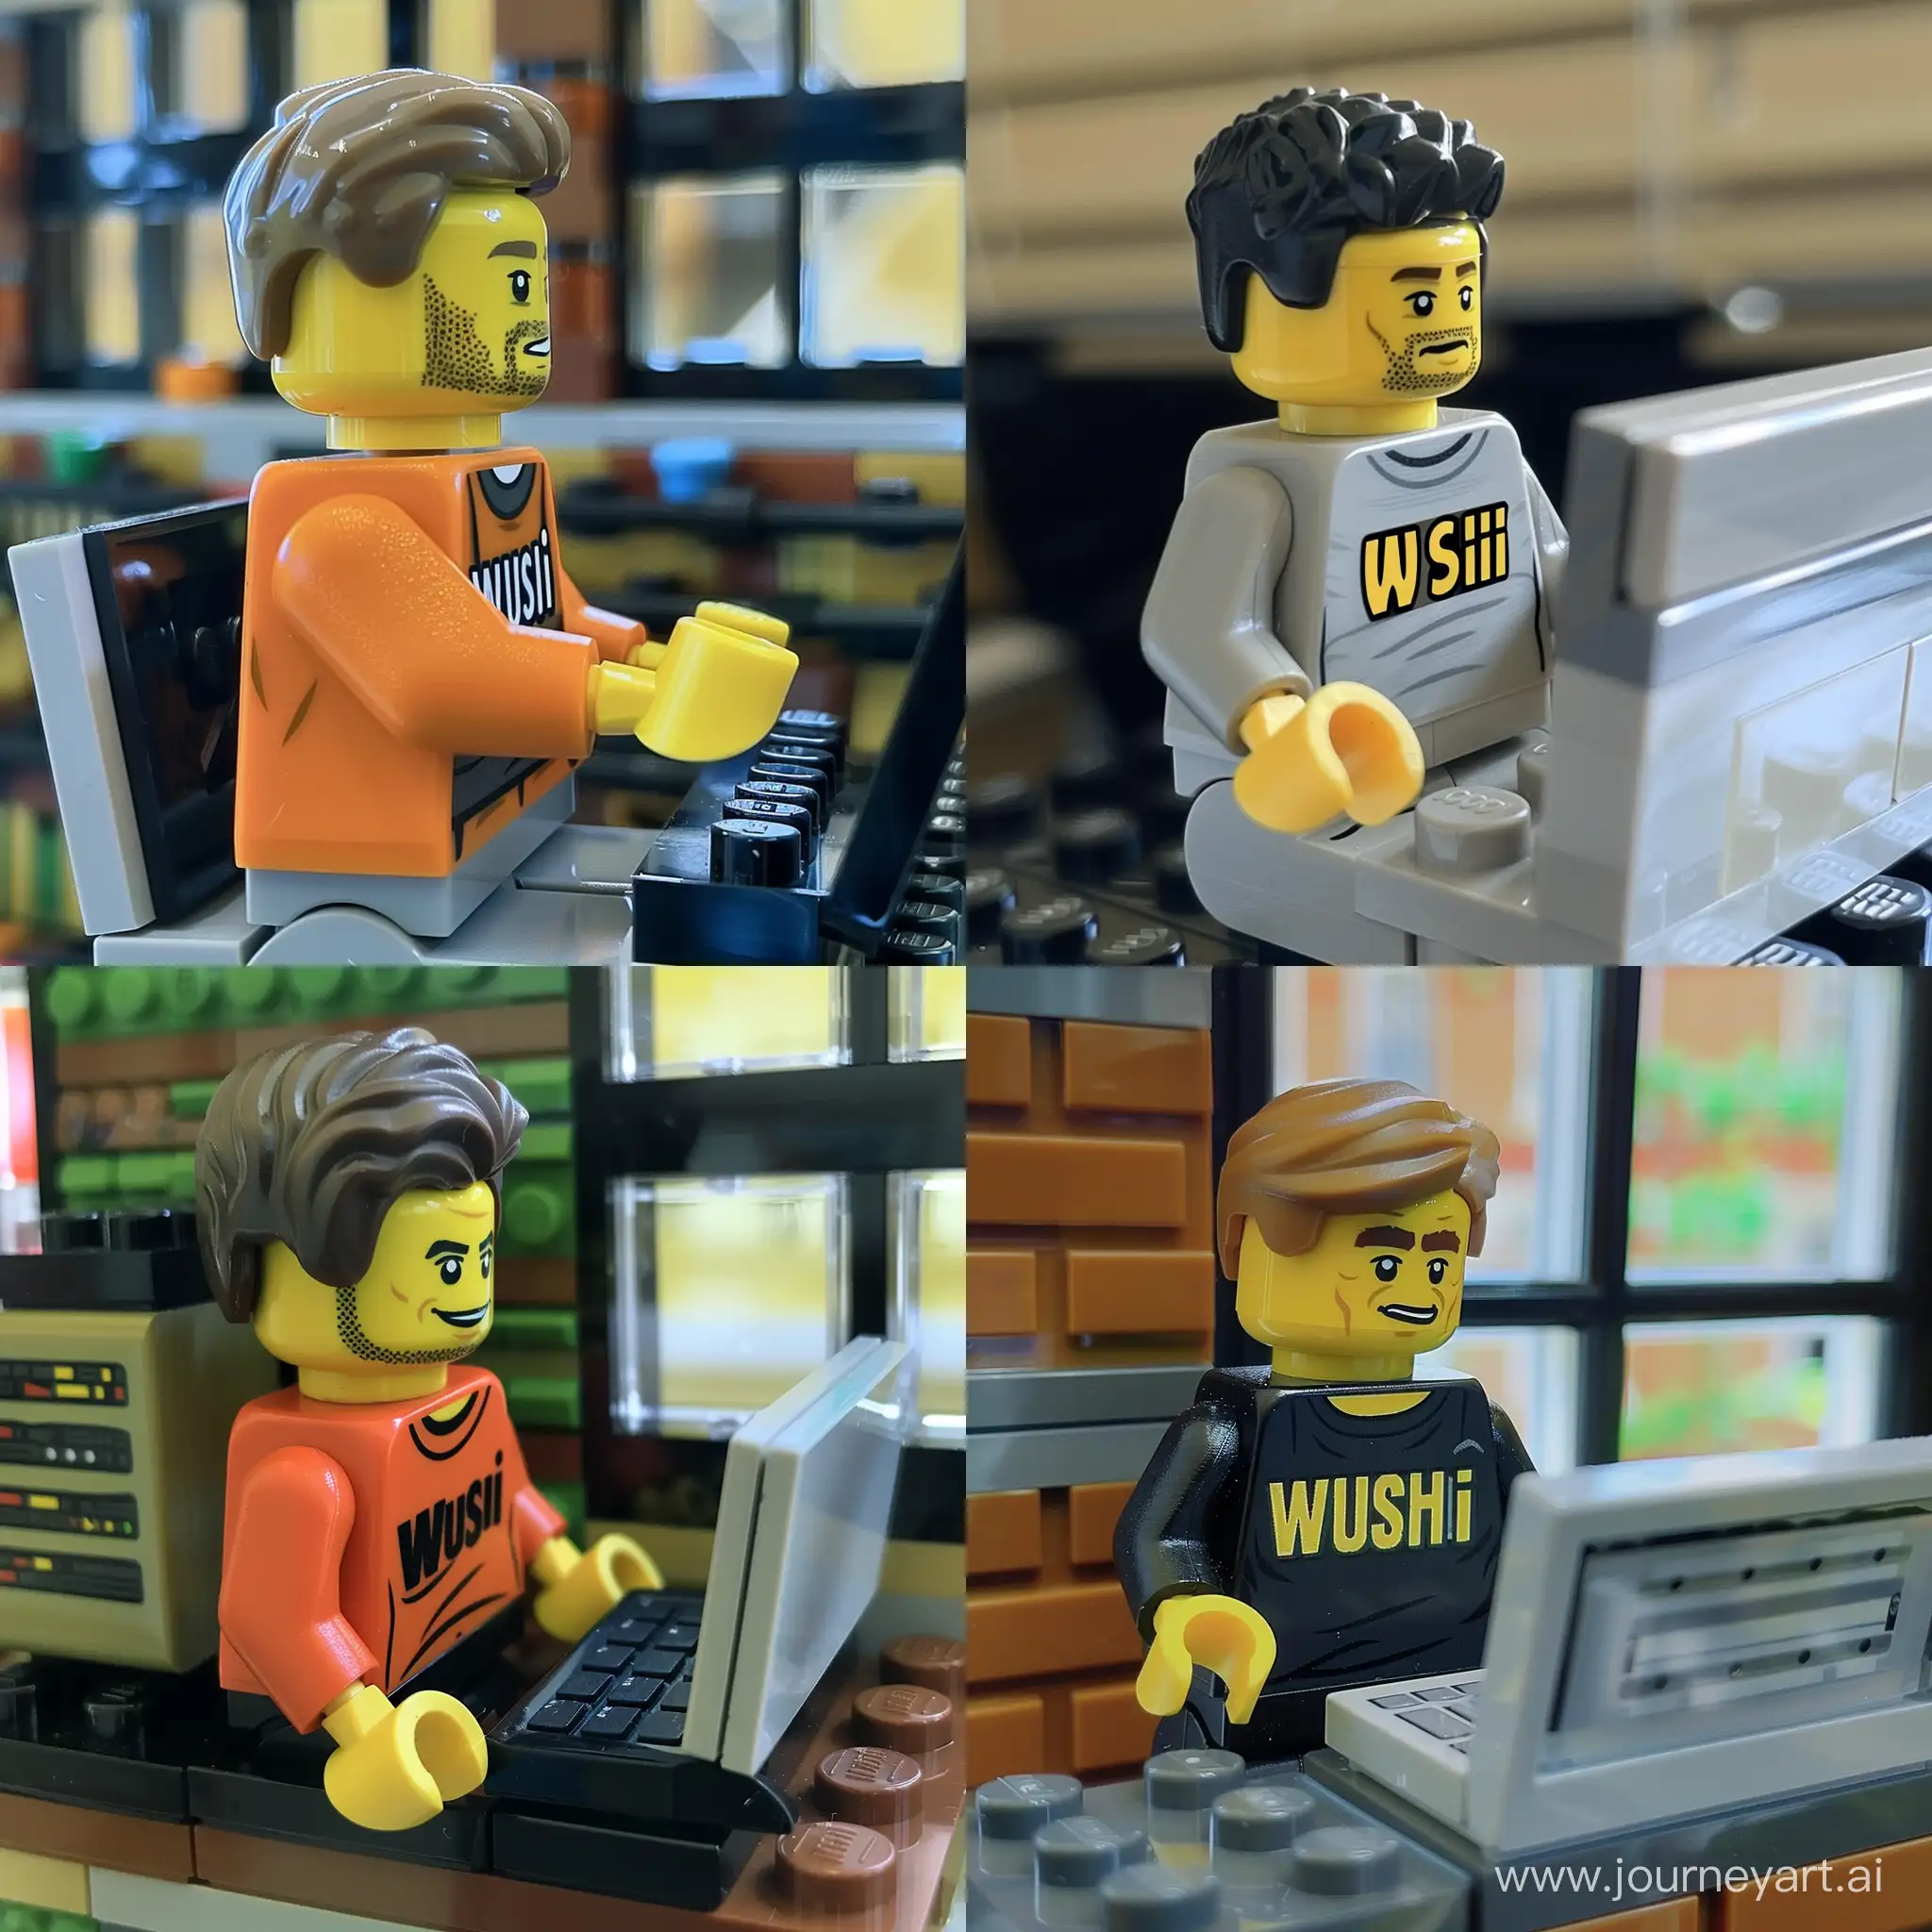 Lego man sitting at a laptop, his T-shirt says "Wushi", Lego style